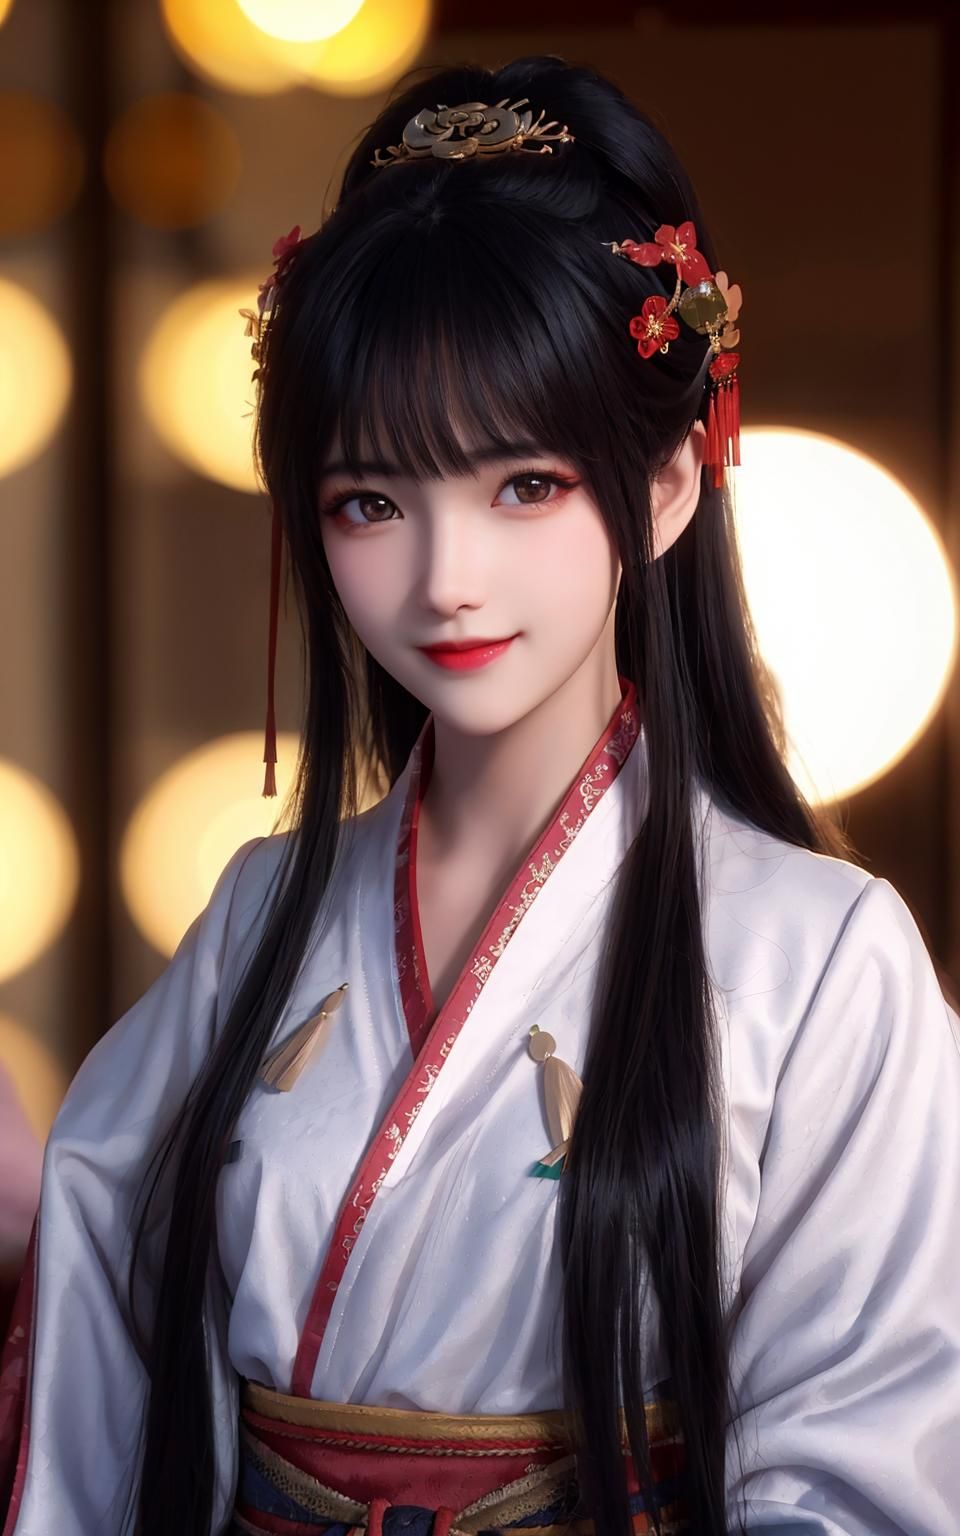 girl wearing traditional Han clothing